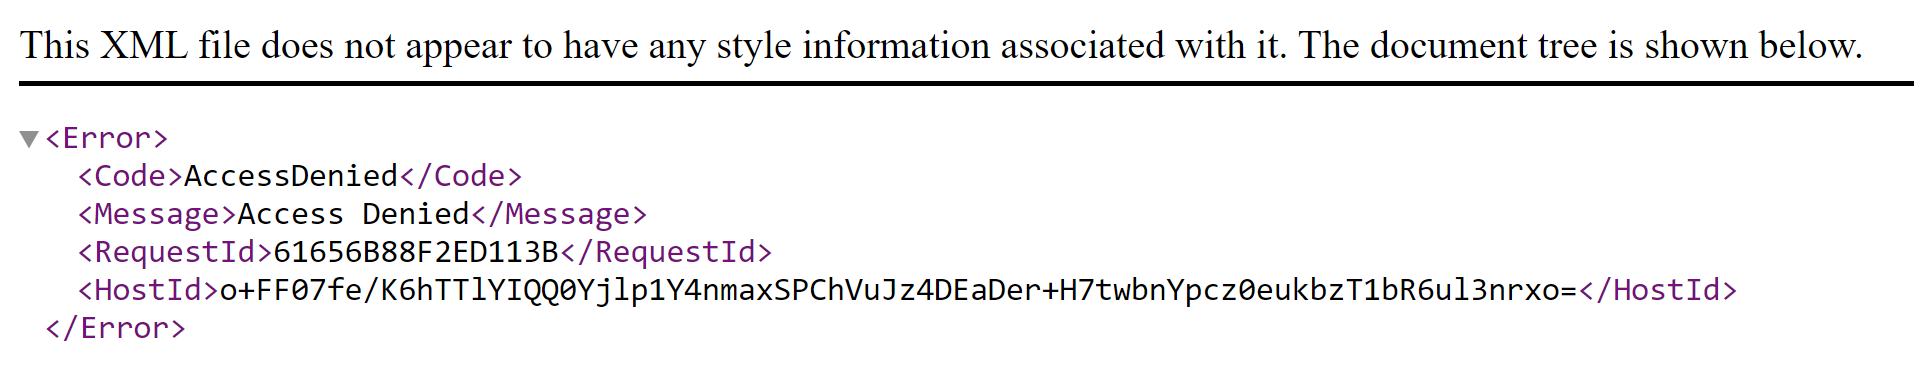 Access Denied S3 error - XML notation